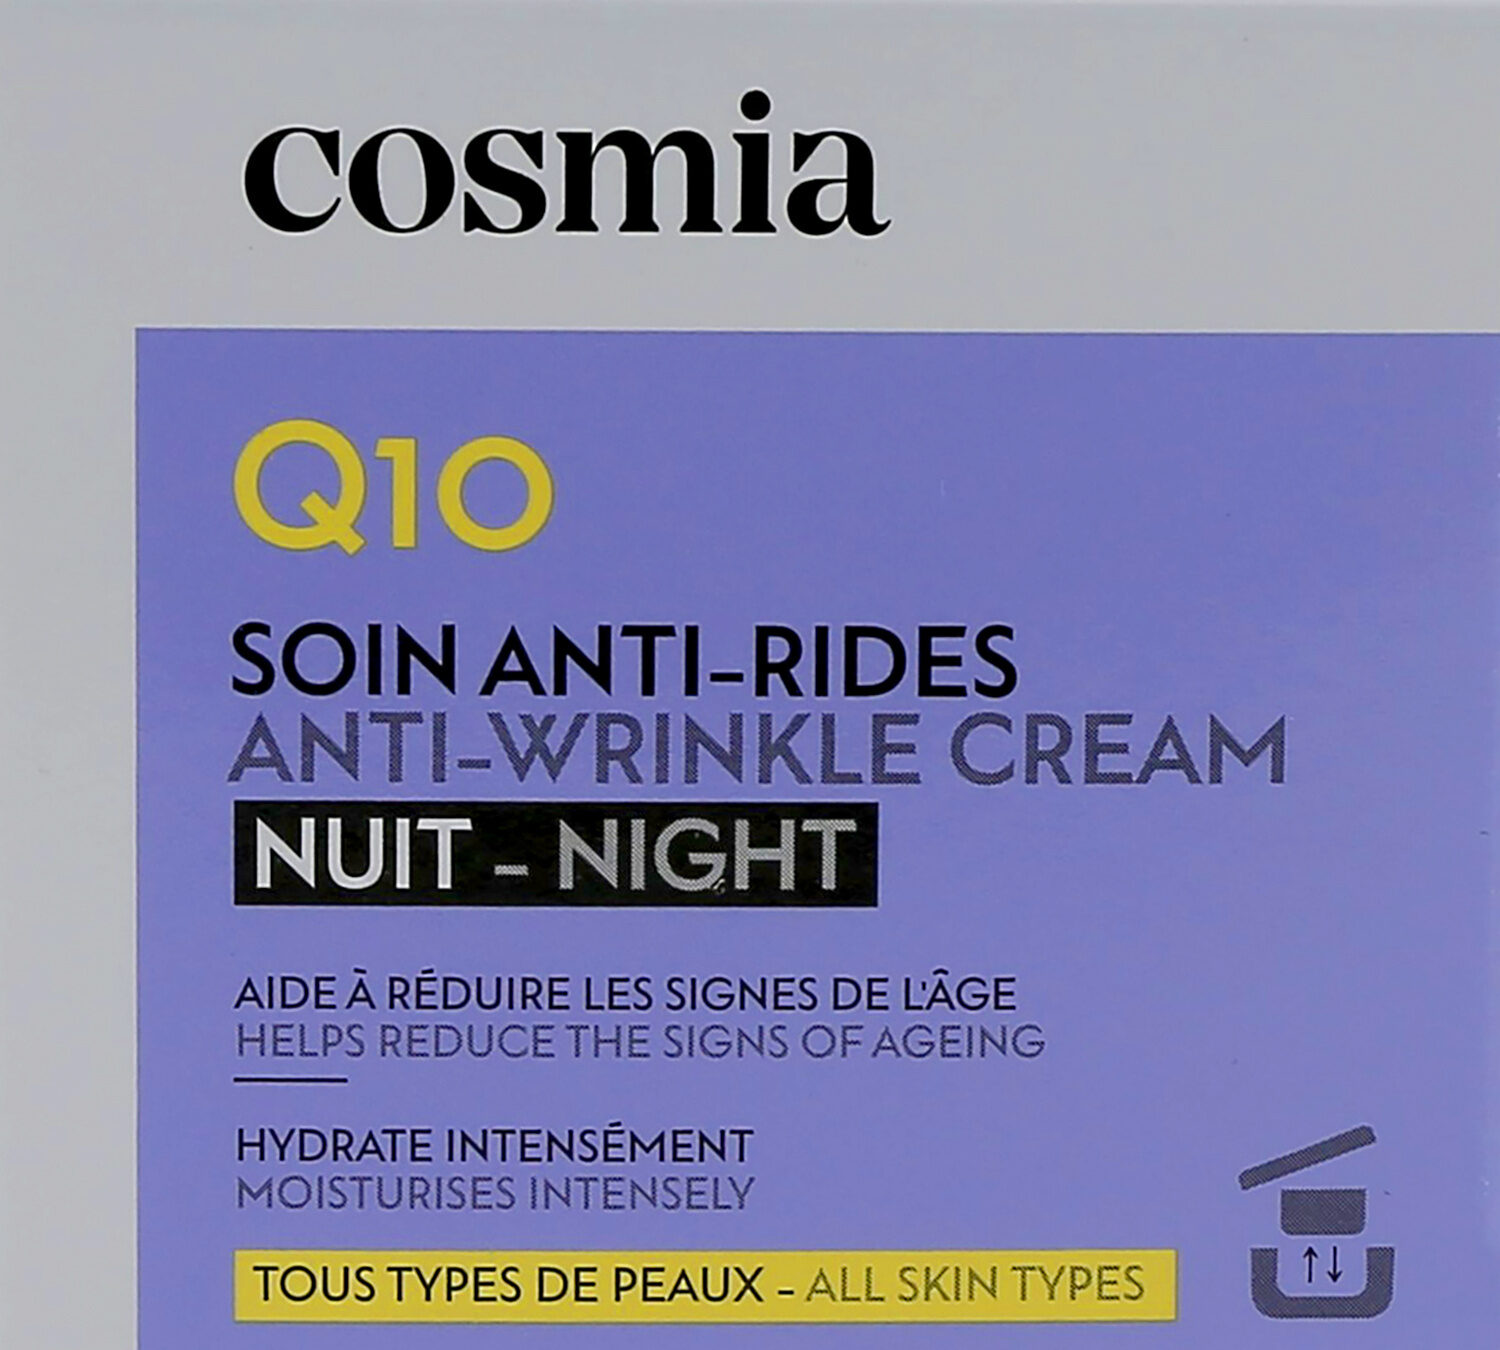 Cosmia creme nuit - anti ride - q10 50ml - Tuote - fr